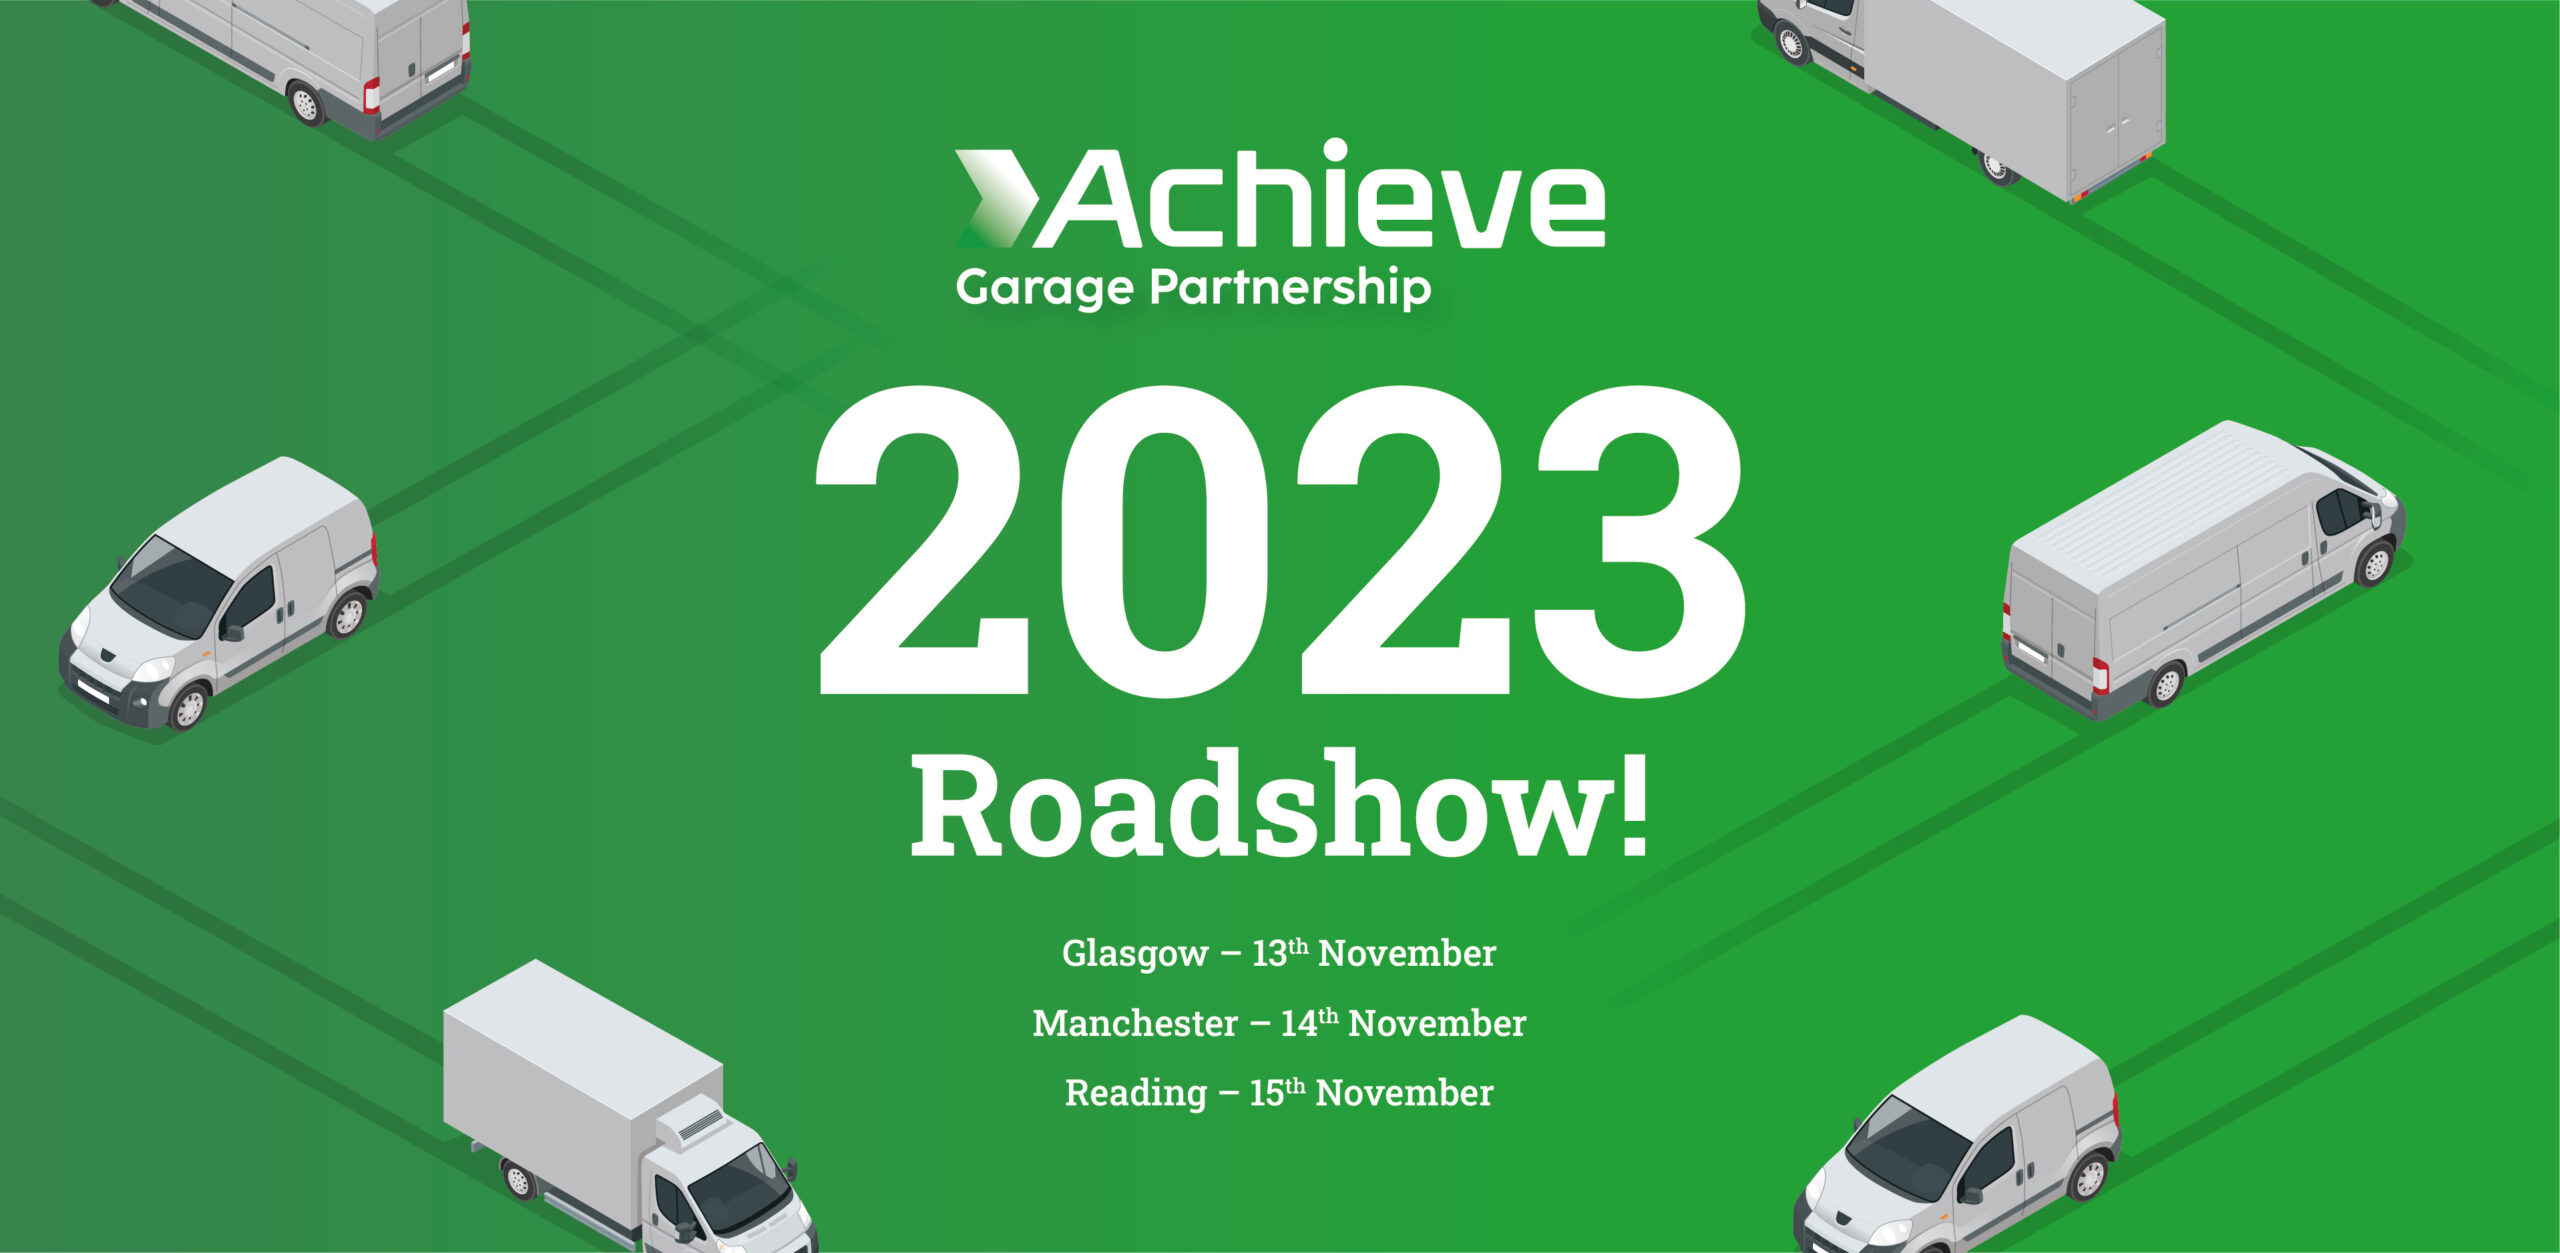 Achieve Garage Partnership Roadshow 2023!